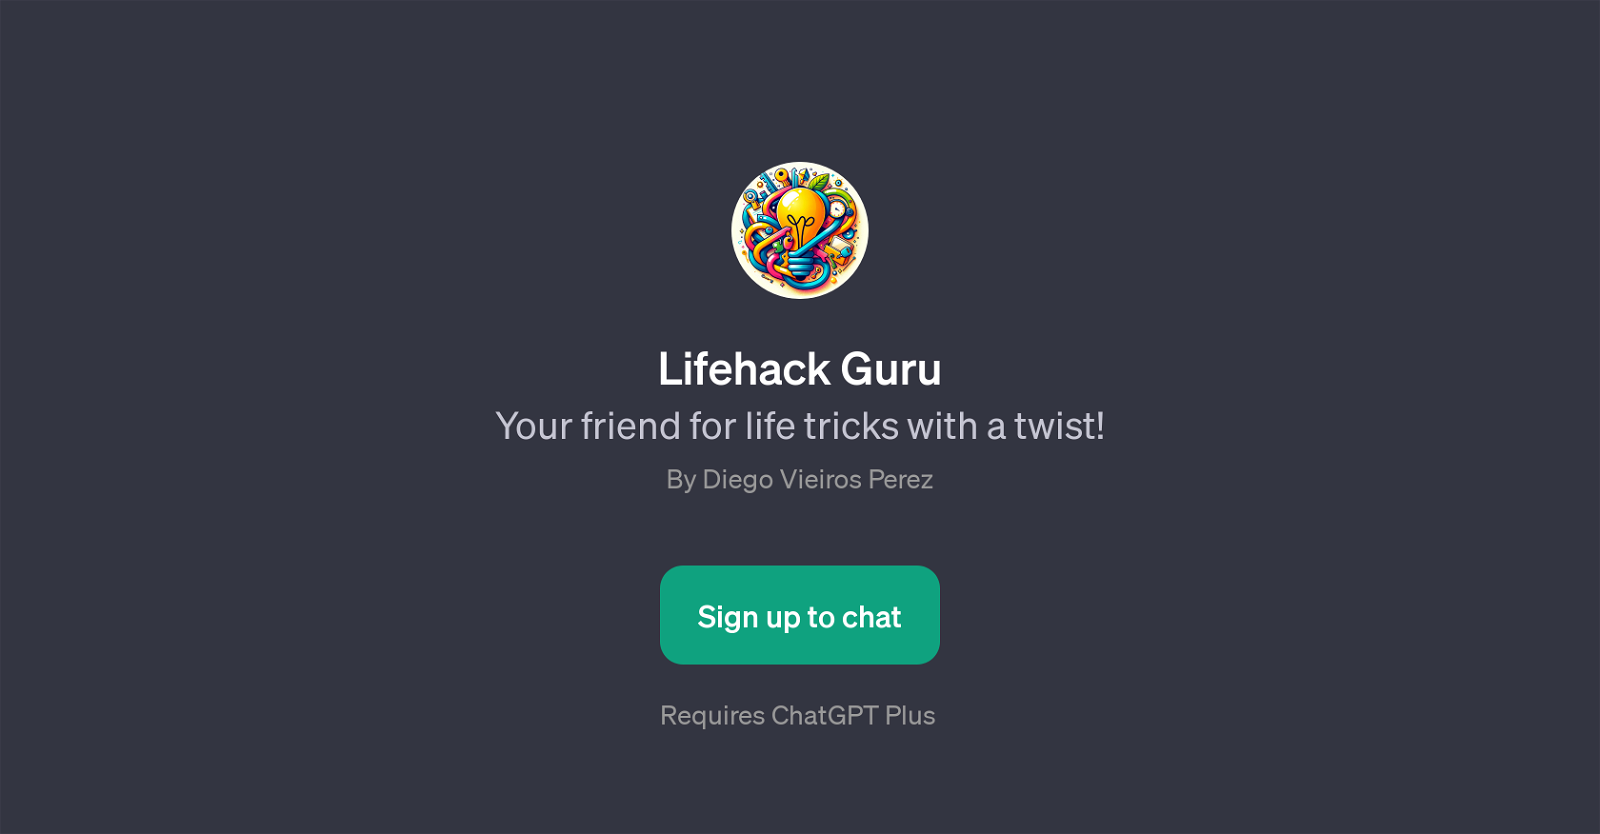 Lifehack Guru website